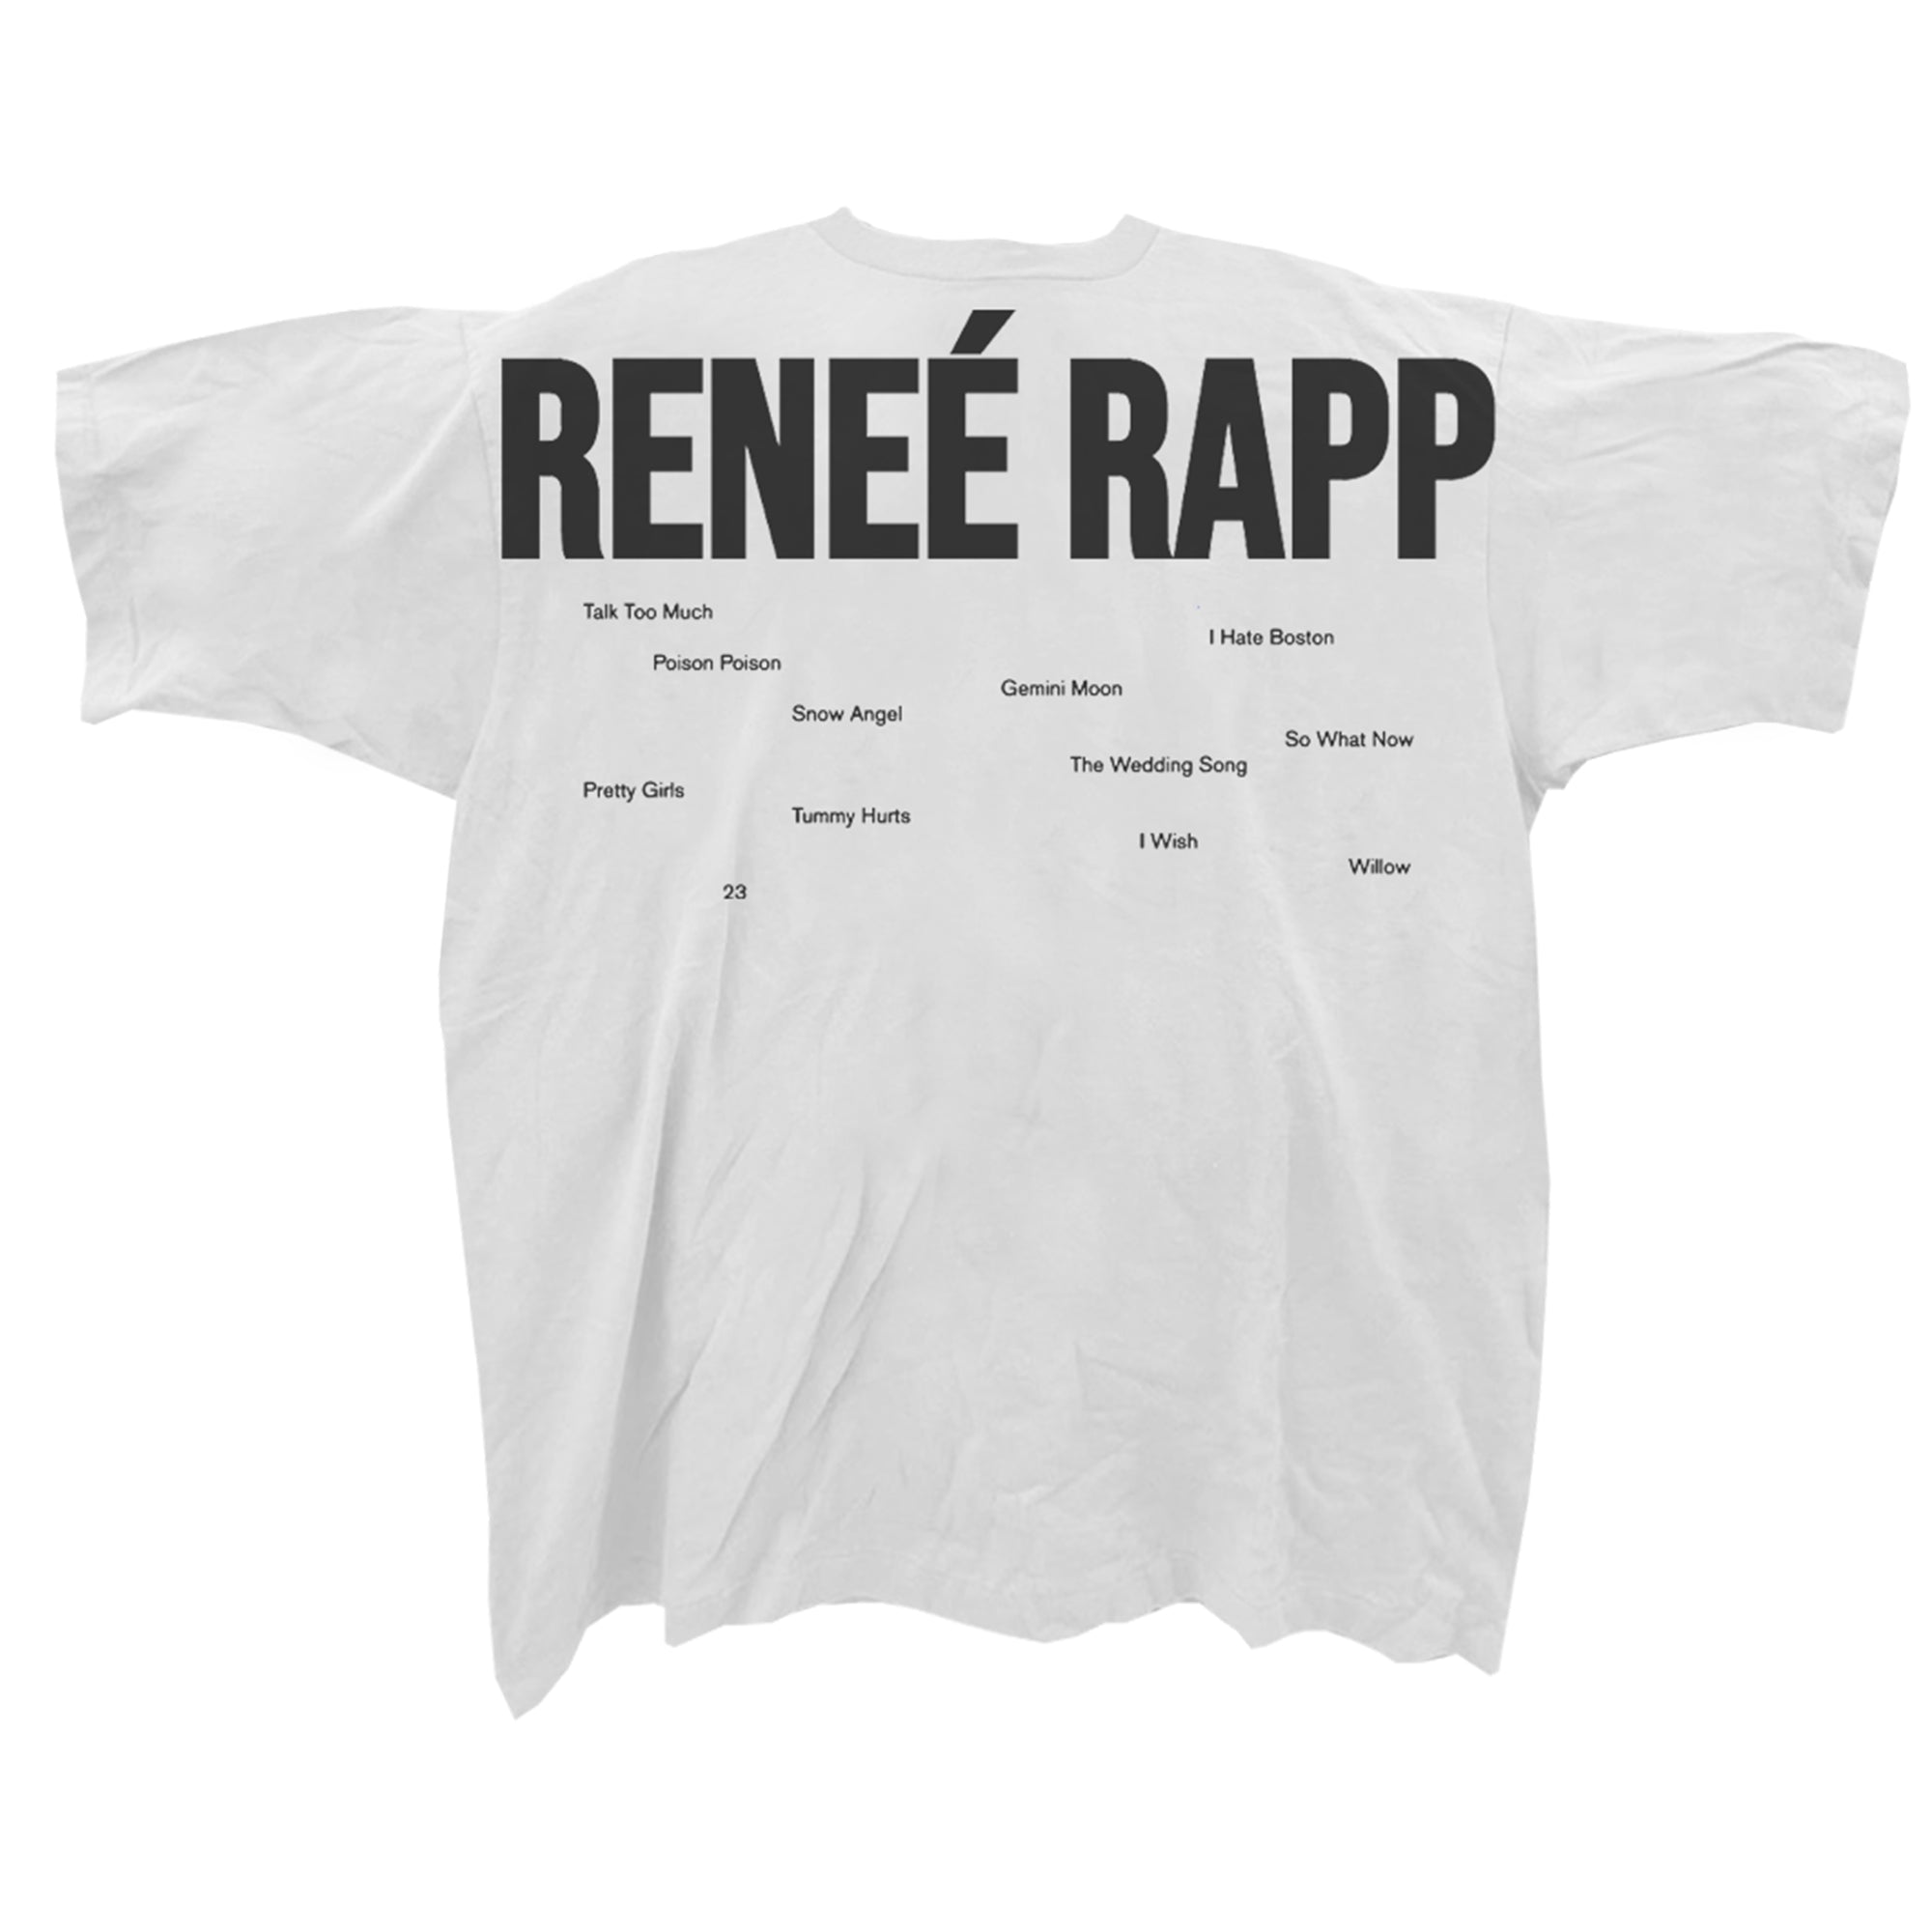 Reneé Rapp - Snow Angel Tracklist Tee